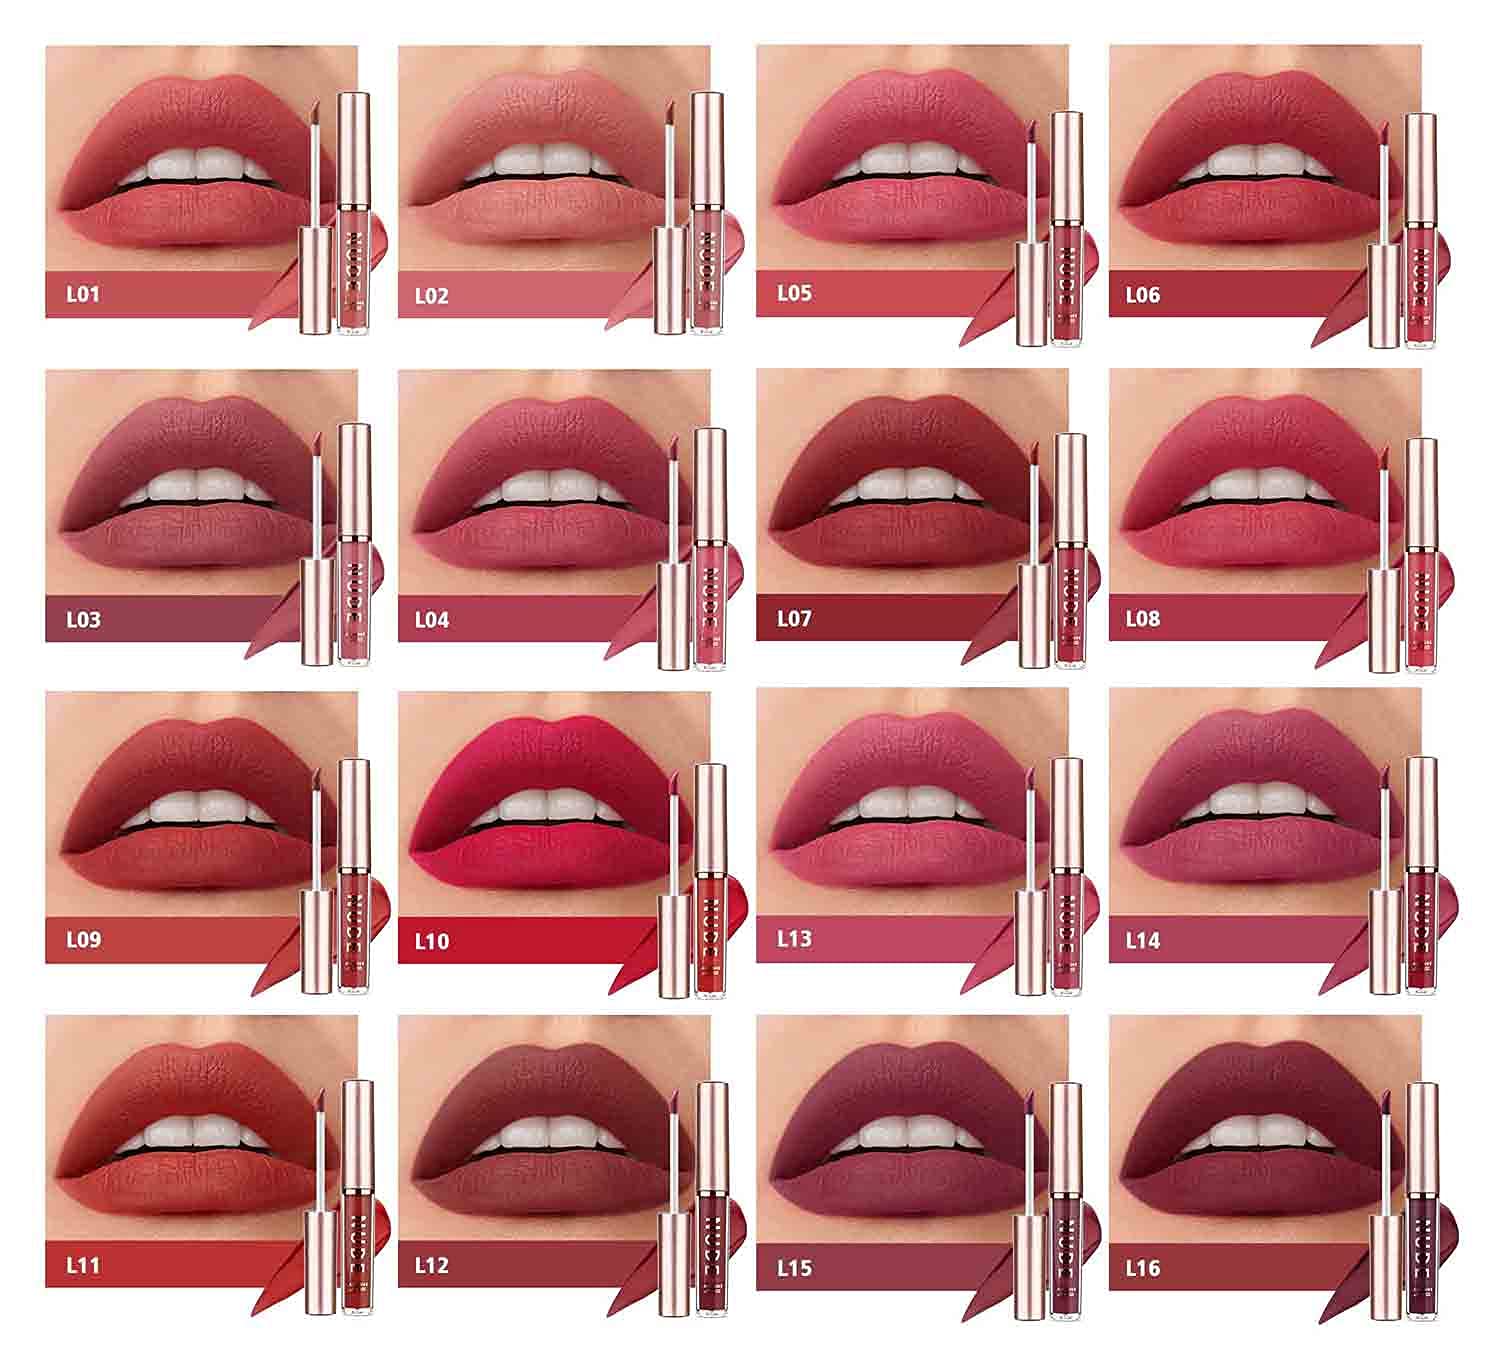 LANGMANNI Matte Liquid Lipstick Makeup Set Velvety Liquid Lipstick Long Lasting Durable Nude Lip Gloss Beauty Cosmetics Set for Girls and Women (16Pcs set)